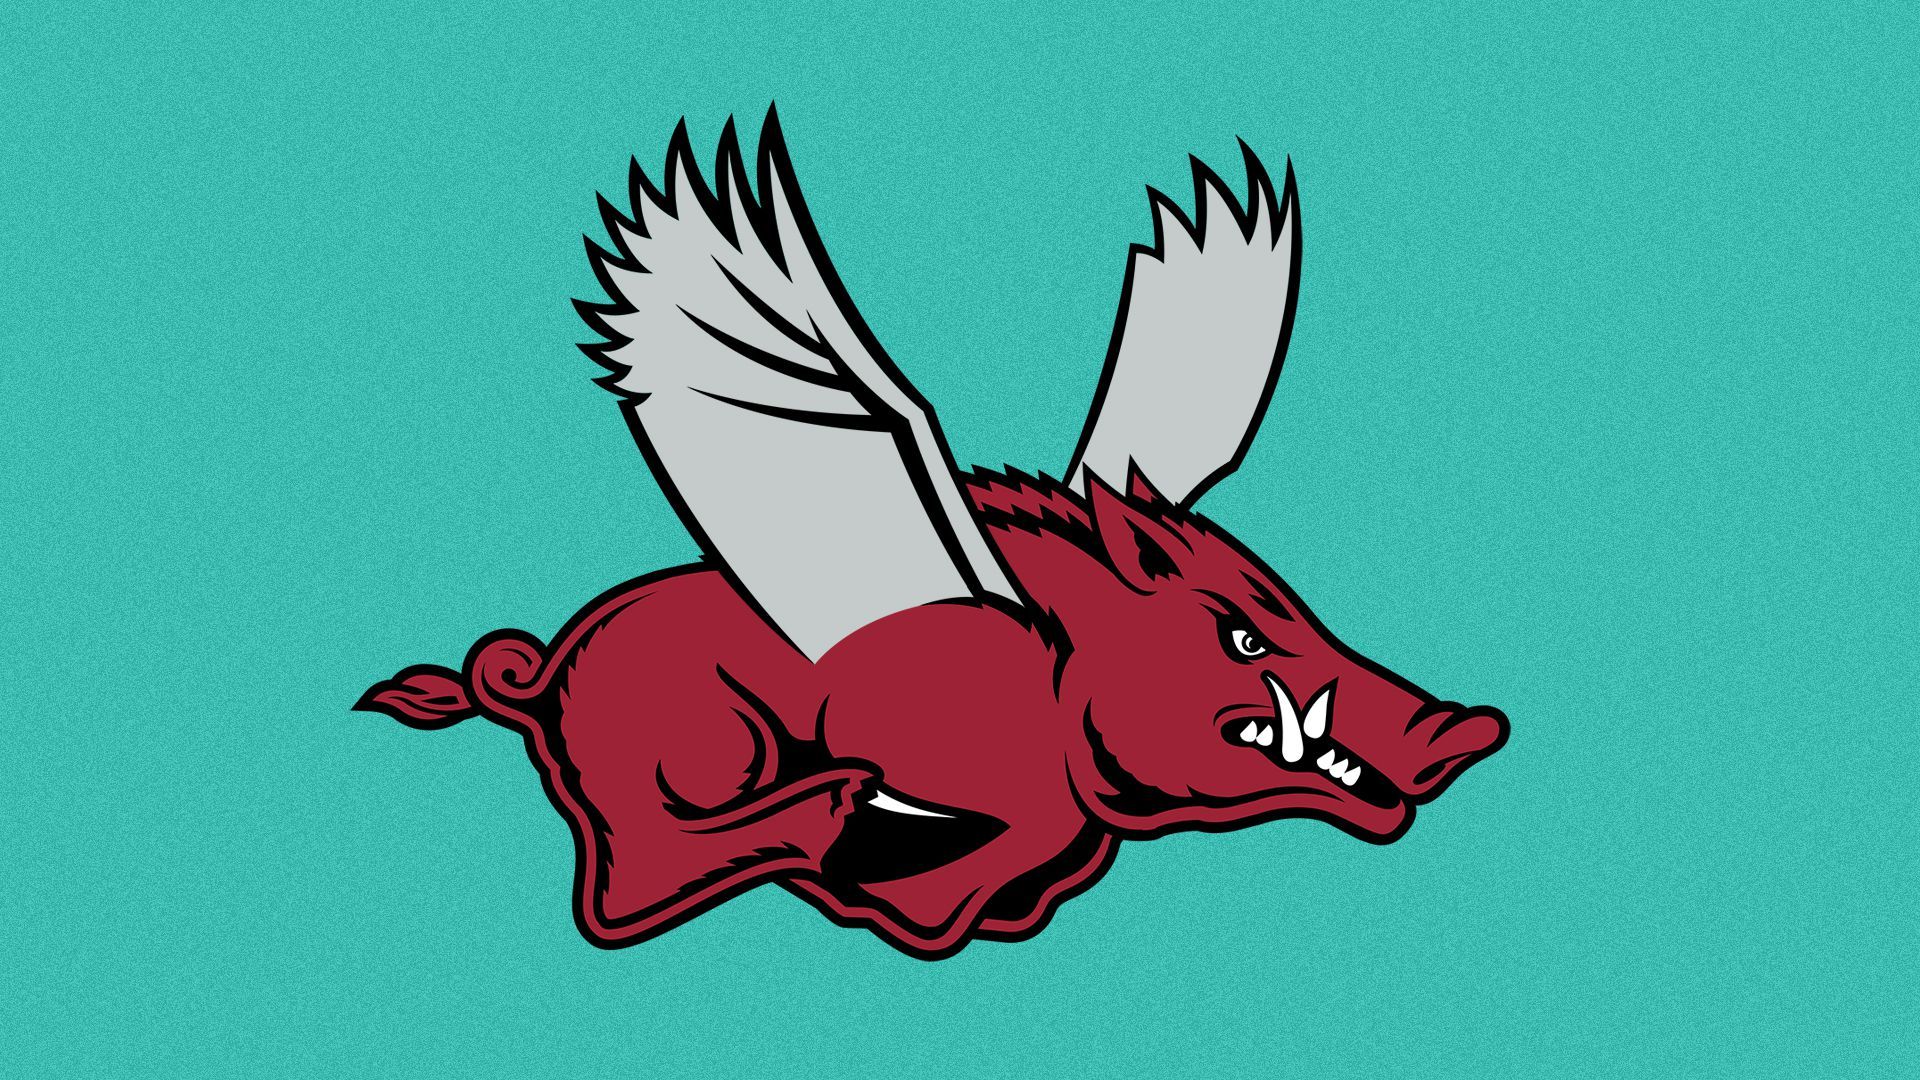 Illustration of the University of Arkansas Razorback logo with wings added.